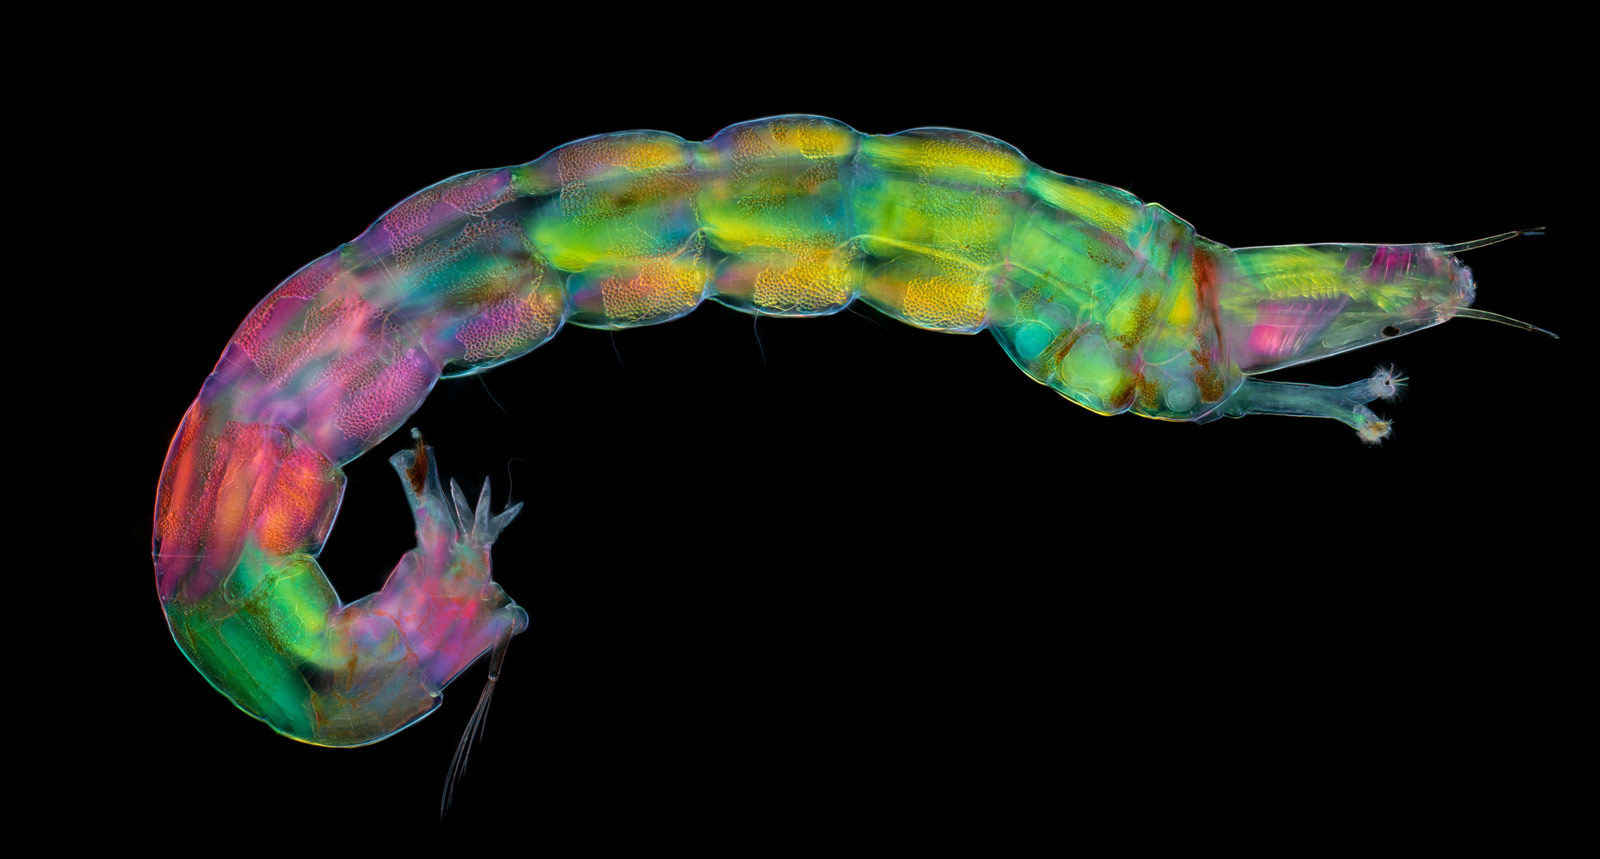 Nikon Small World Call for Entries - Image of a Midge Larva